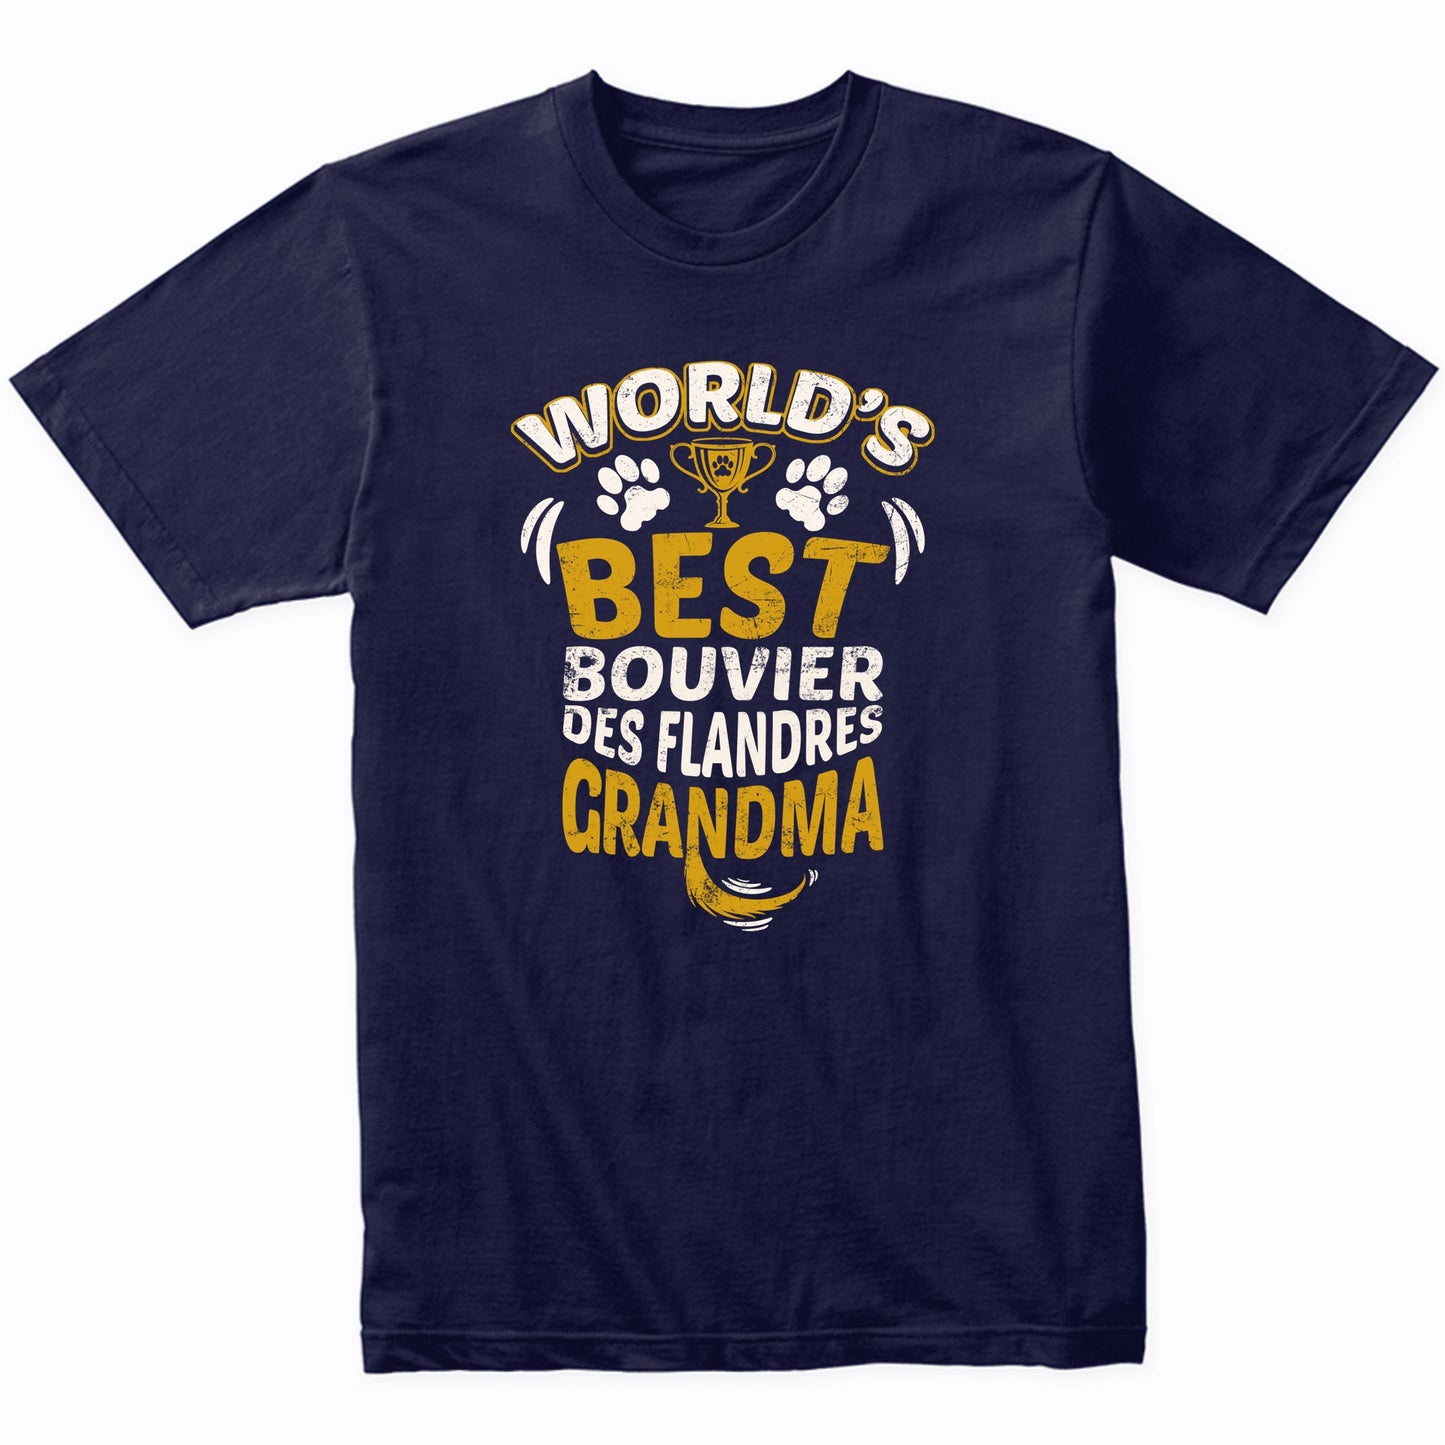 World's Best Bouvier des Flandres Grandma Graphic T-Shirt